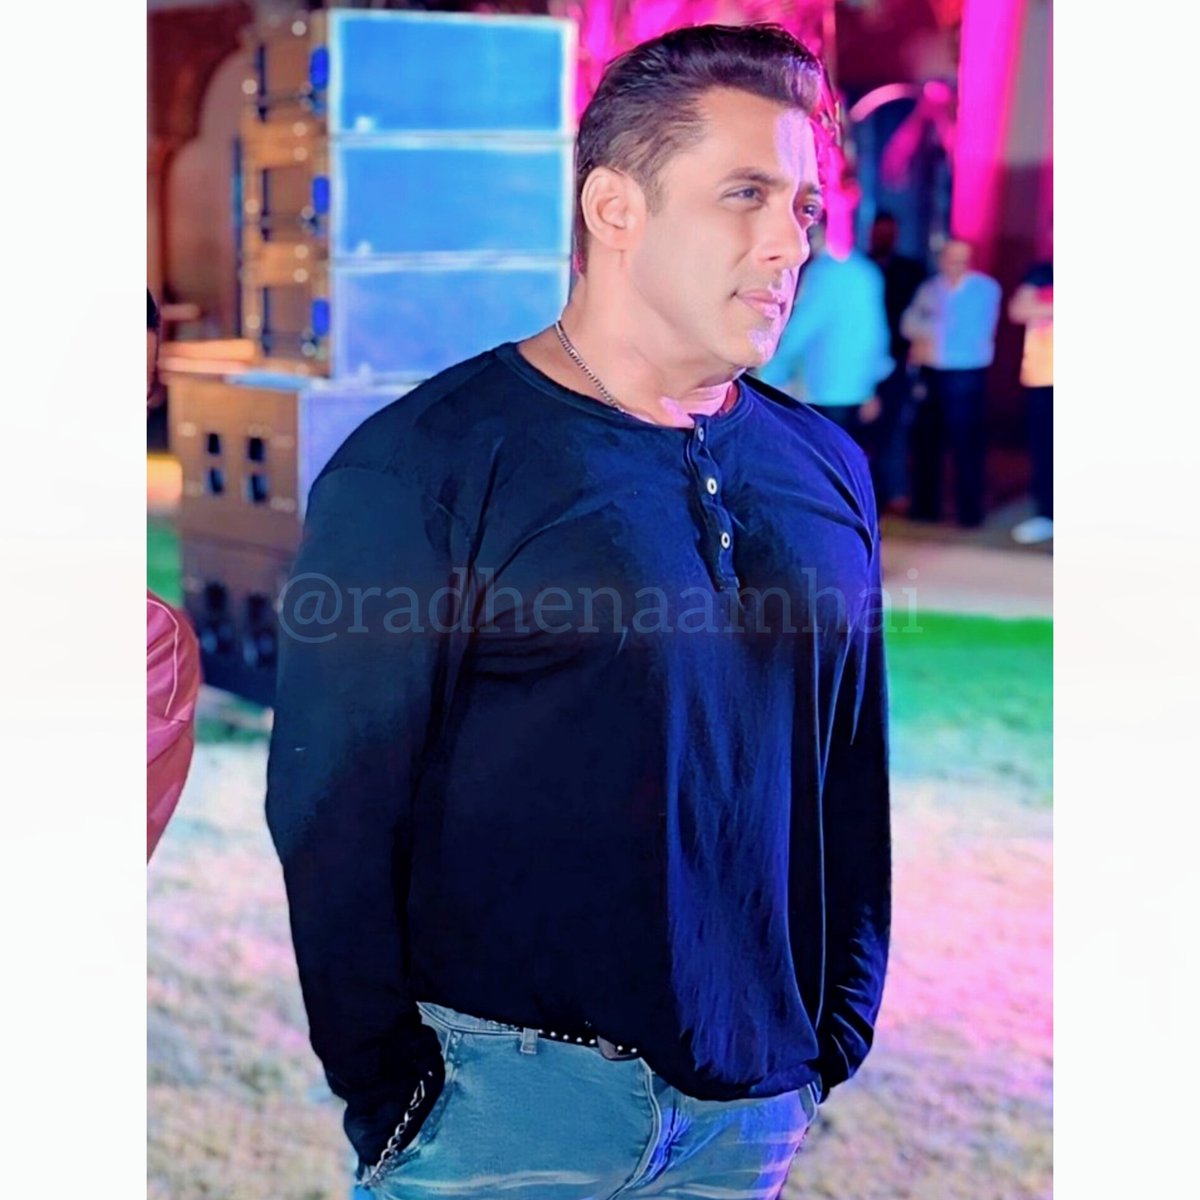 What a handsome man 😍 #SalmanKhan